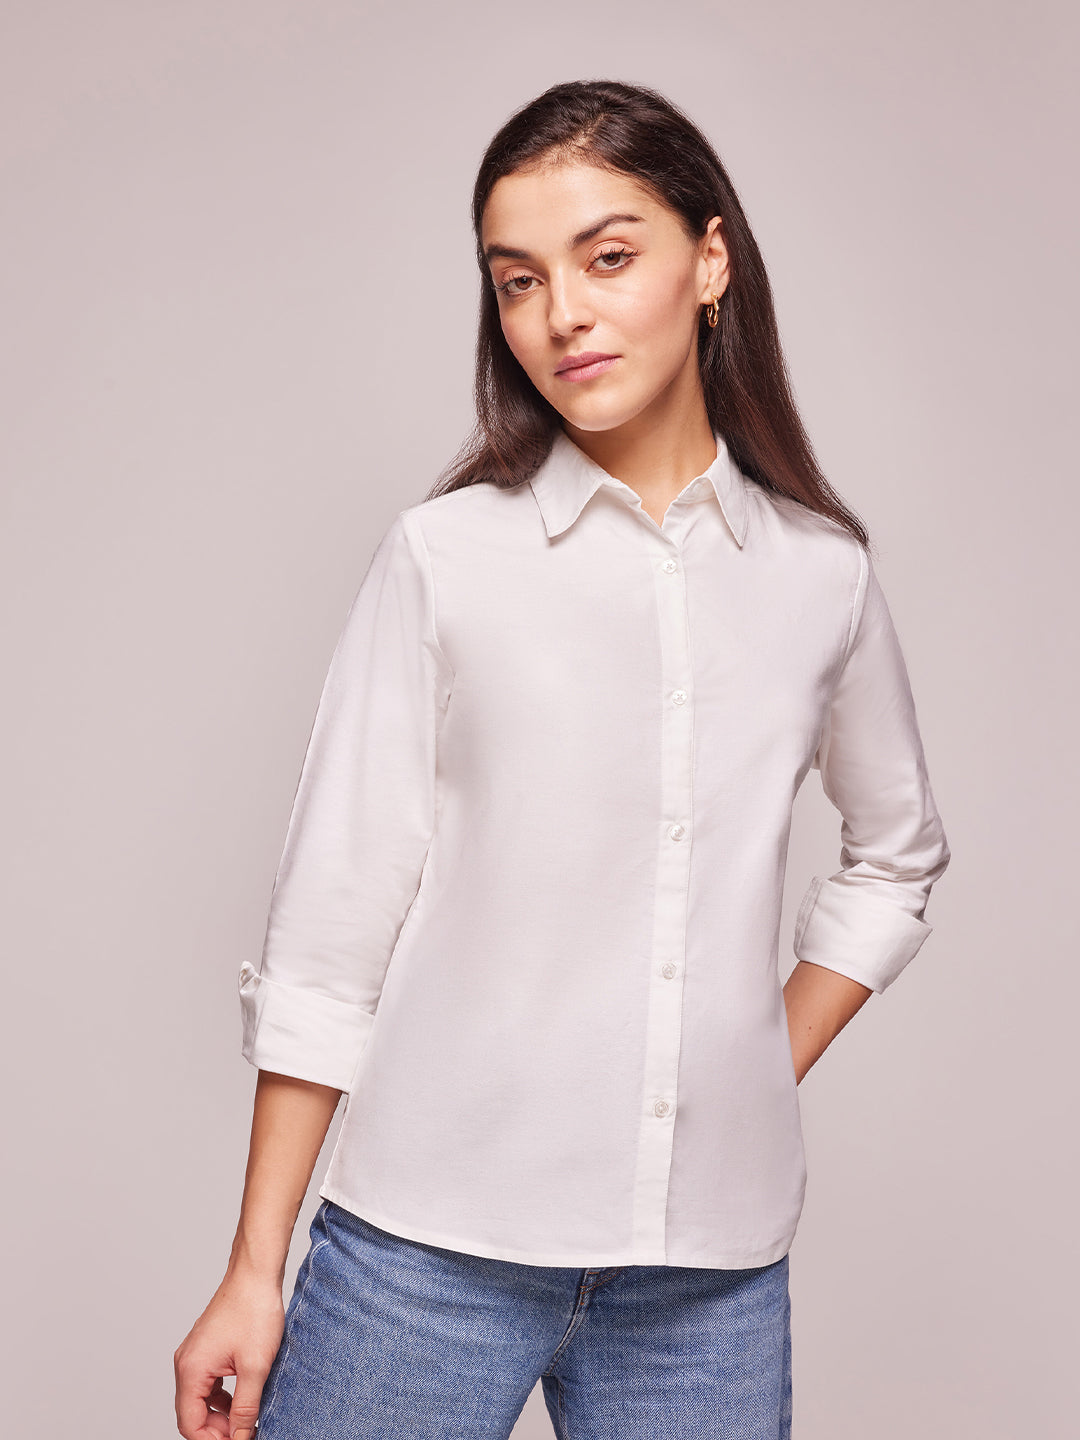 Bombay High Women's Premium Cotton Solid Bright White Oxford Shirt